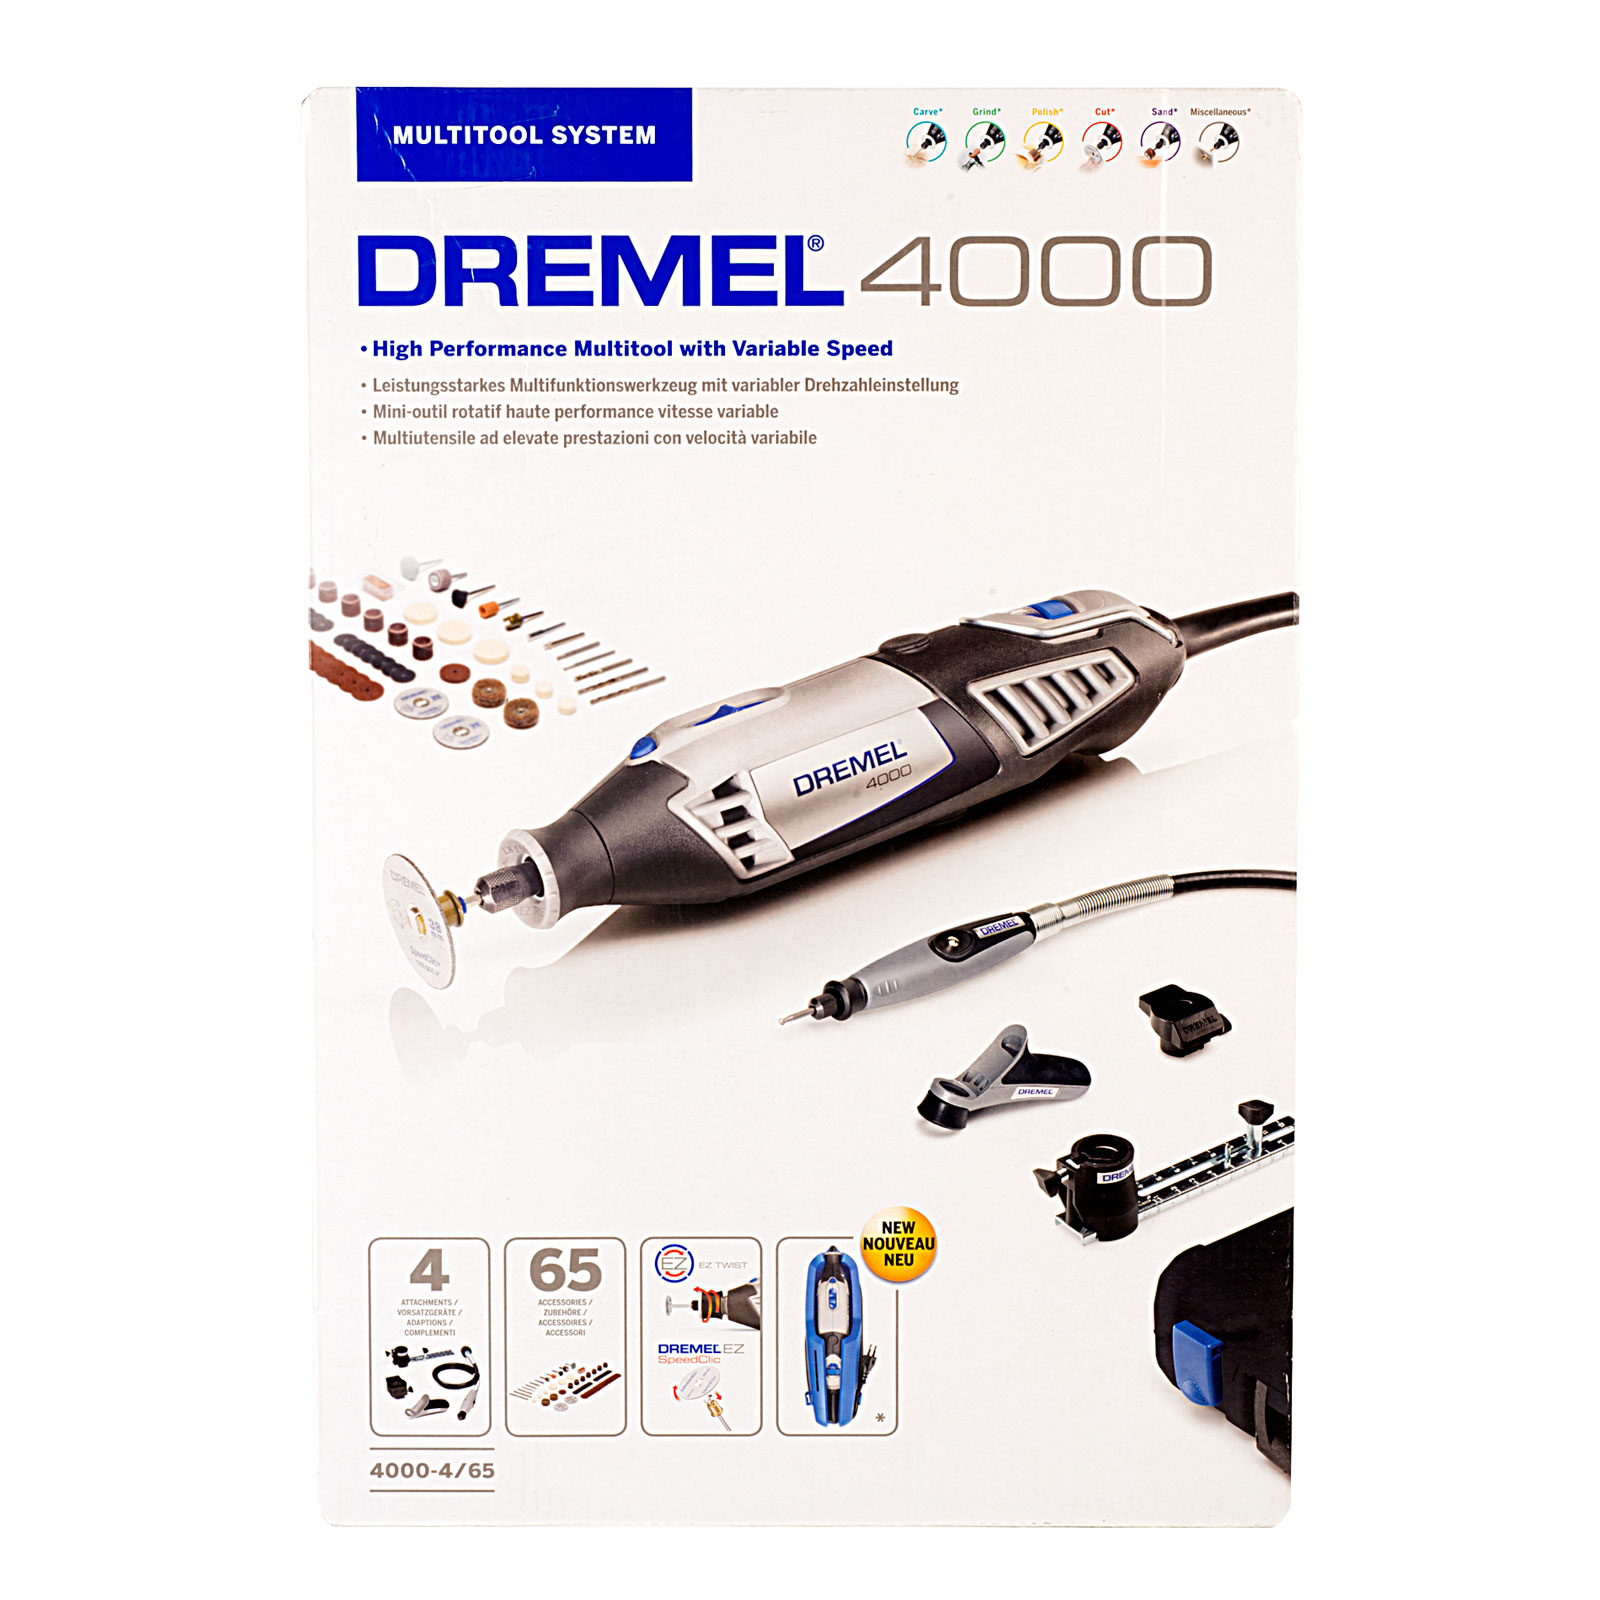 Dremel 3000-15 EZ Series Multi-Tool and Dremel 220 Workstation Drill Stand